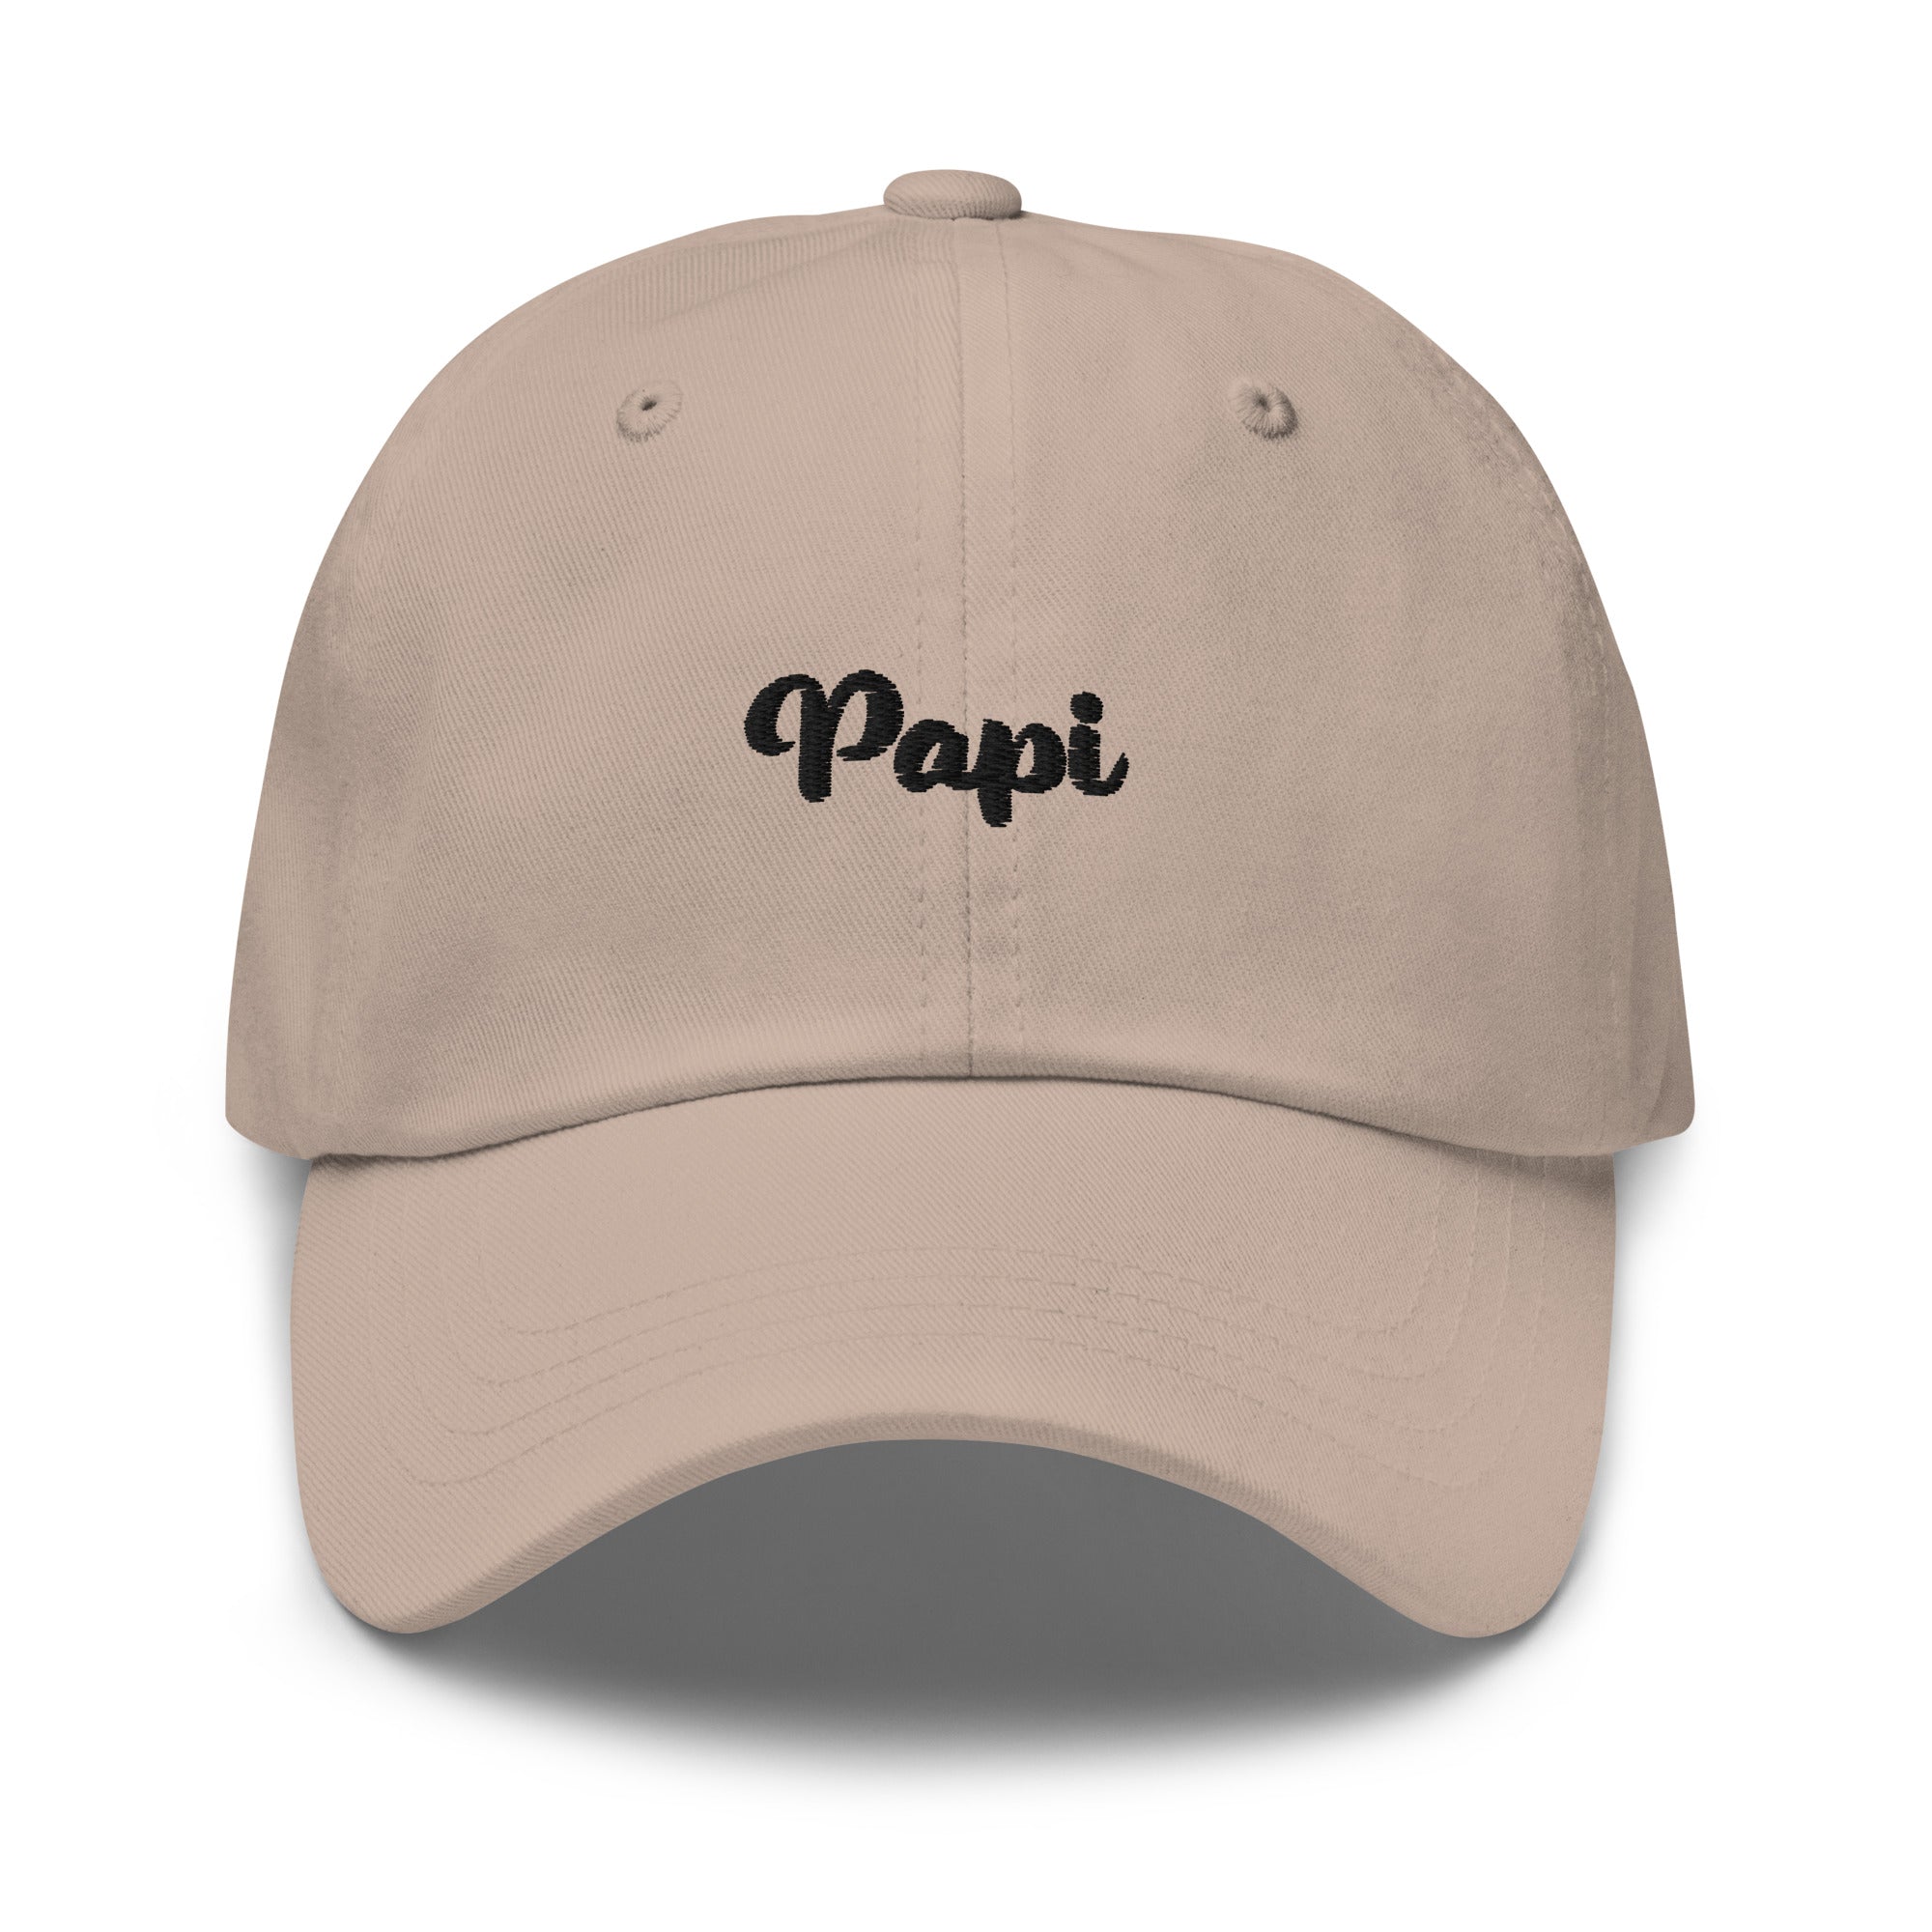 AGAD Summer 24 (Papi) hat